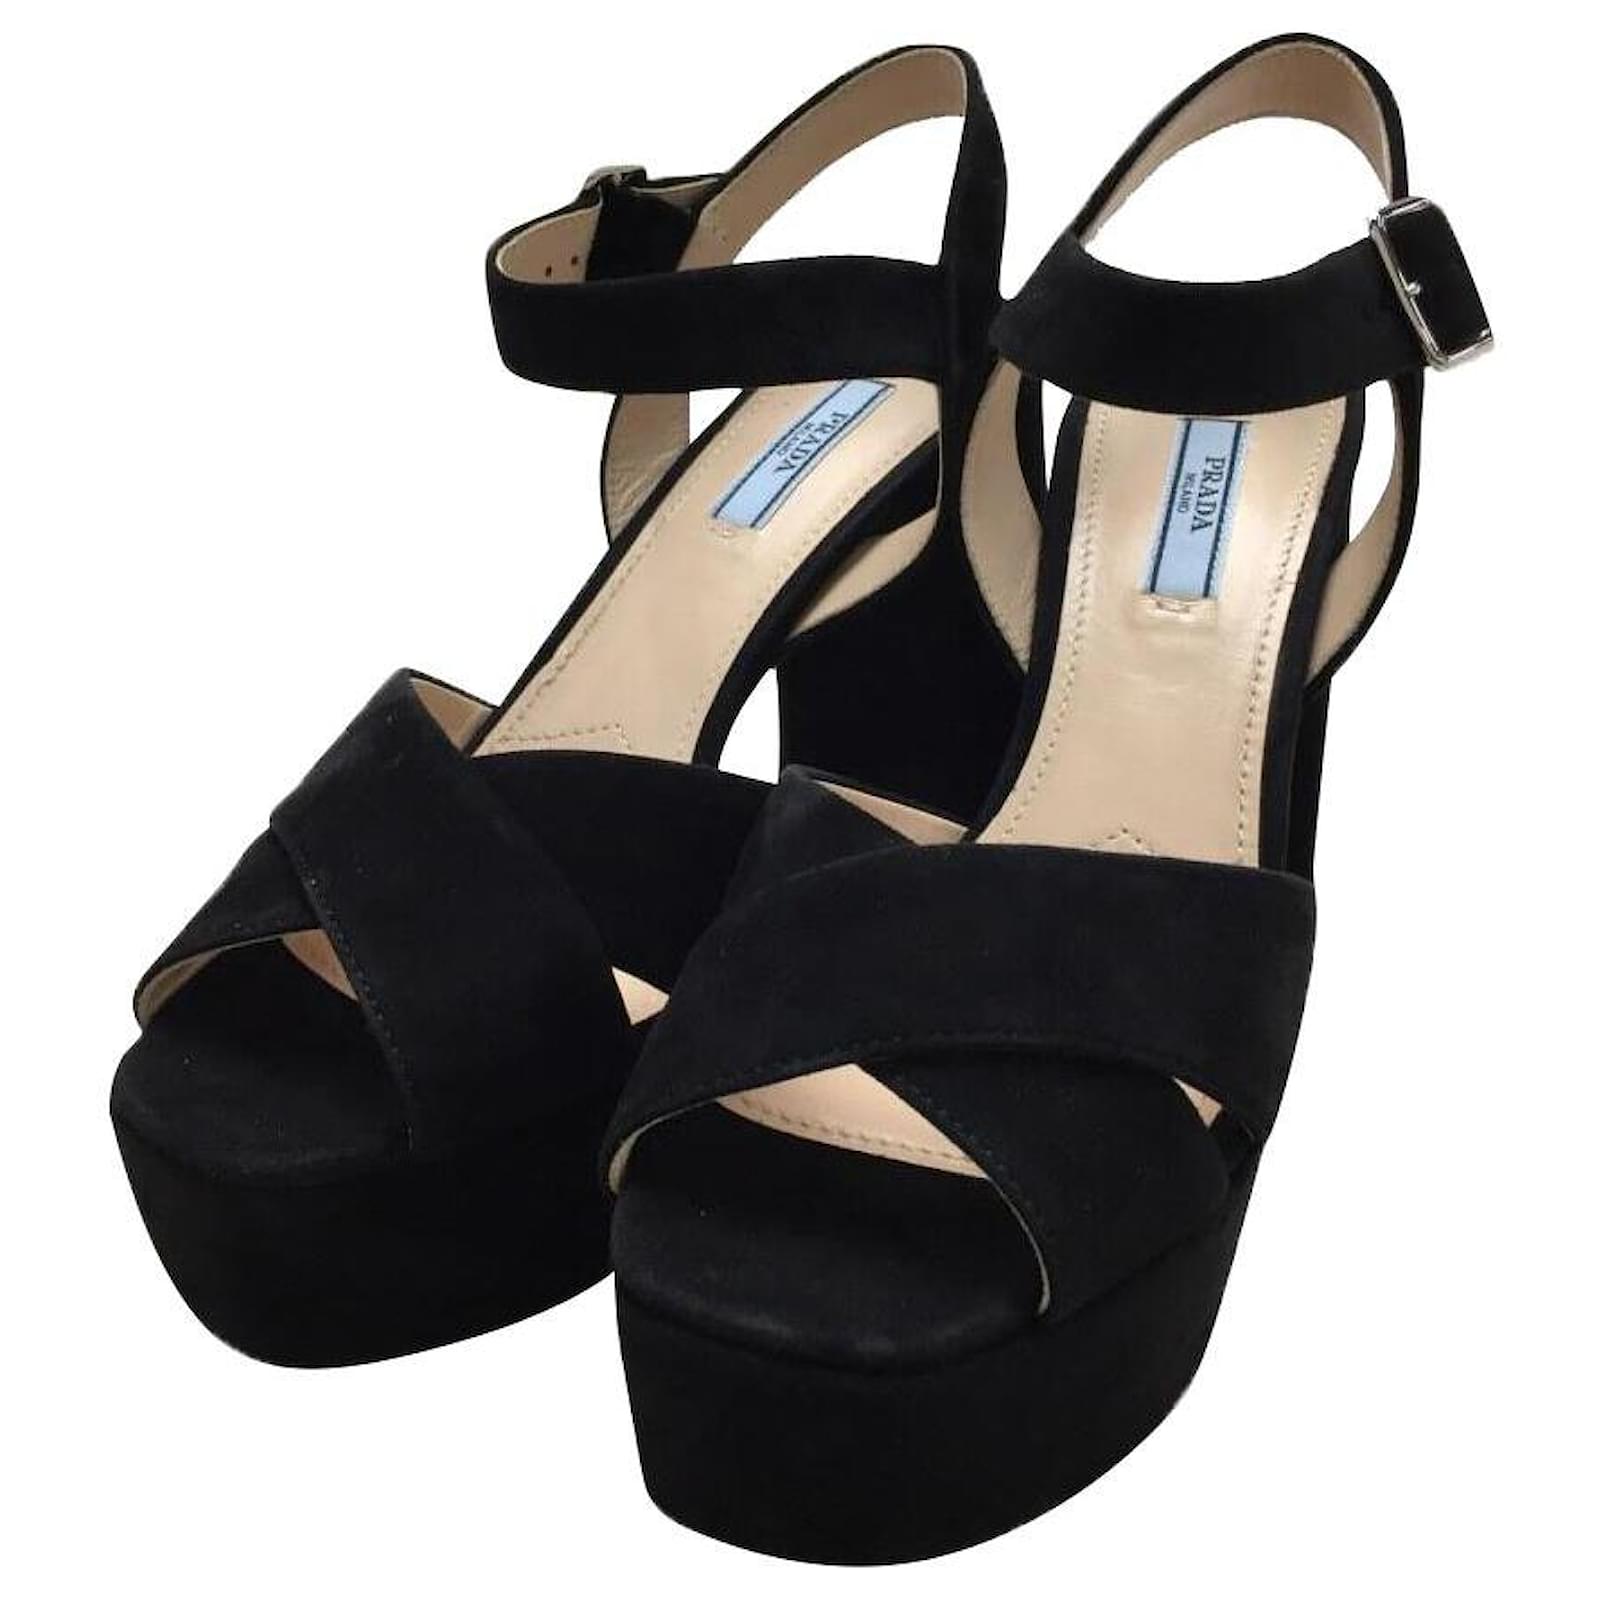 PRADA Suede platform sandals / sandals / 38 / BLK / suede / ankle